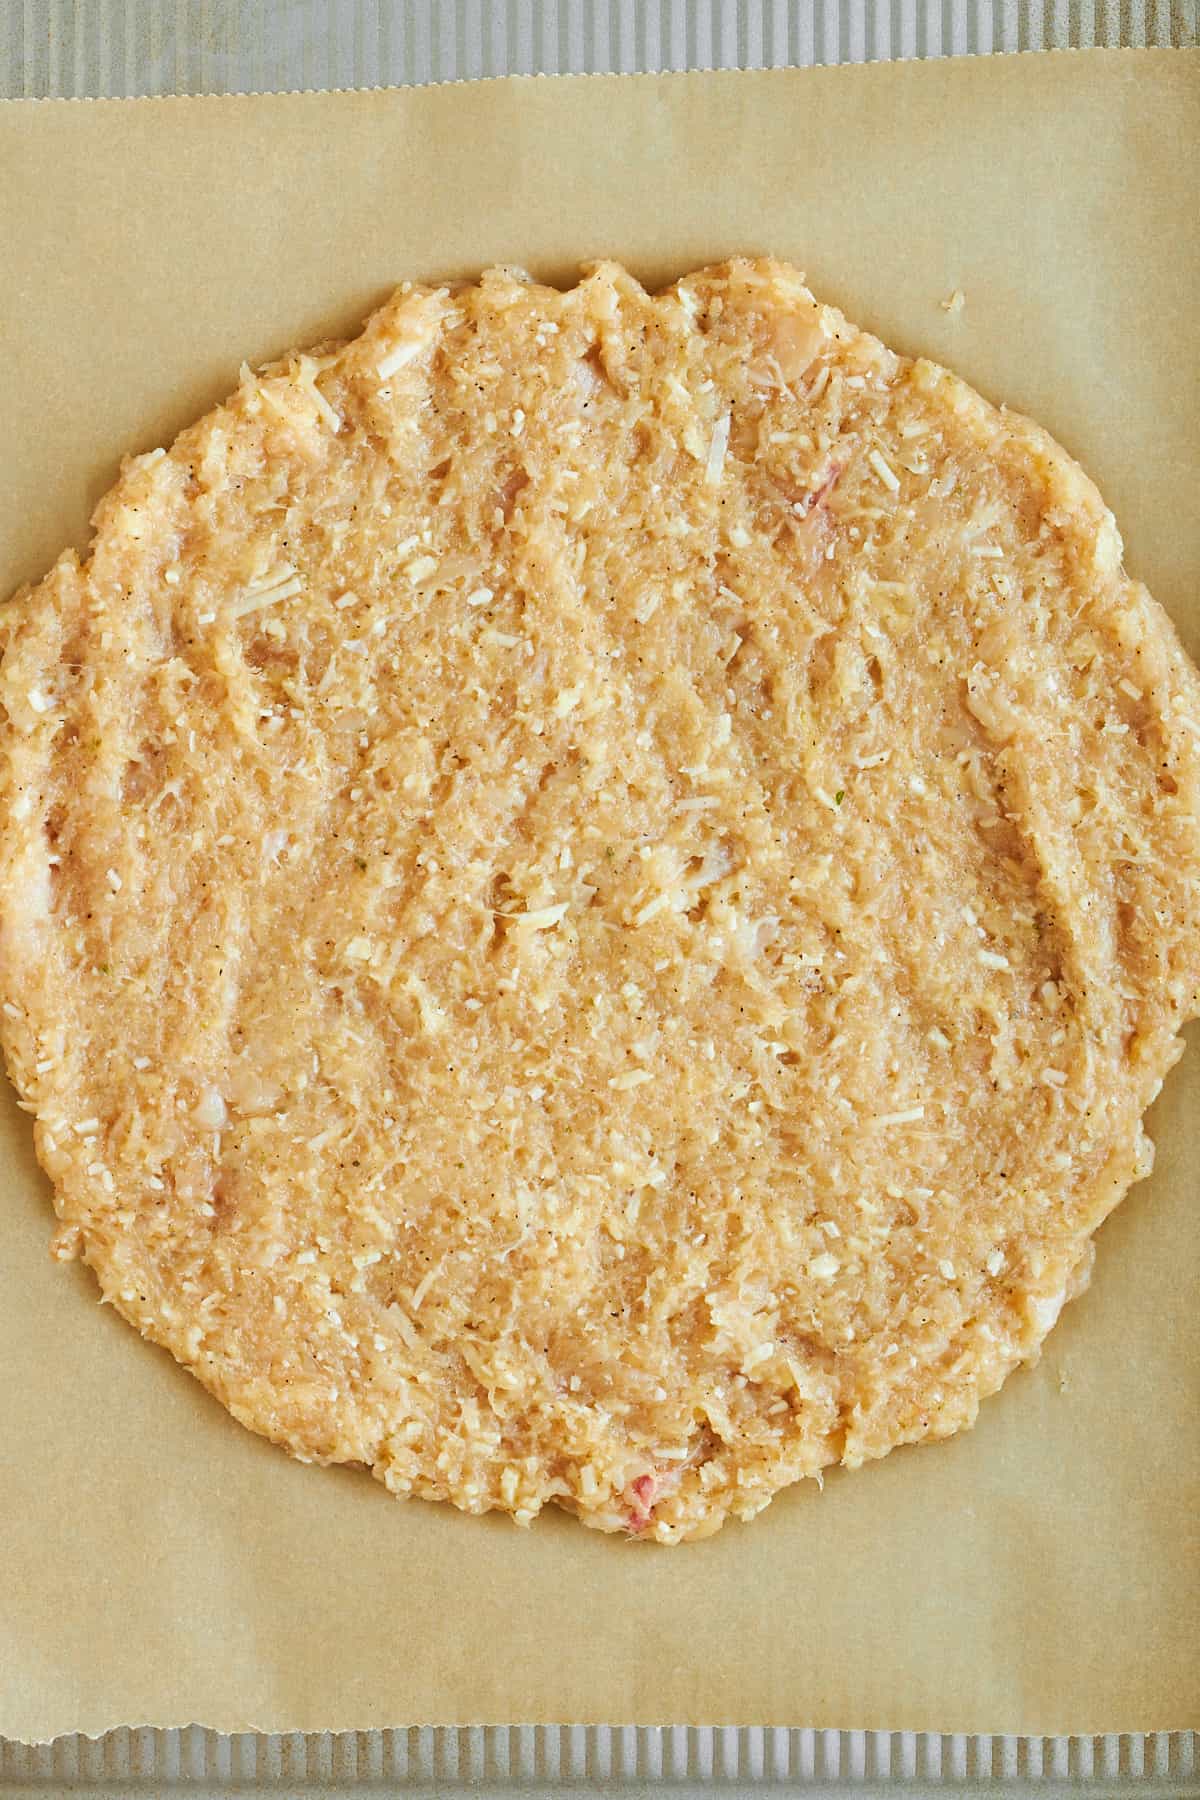 Raw chicken crust on a baking sheet. 